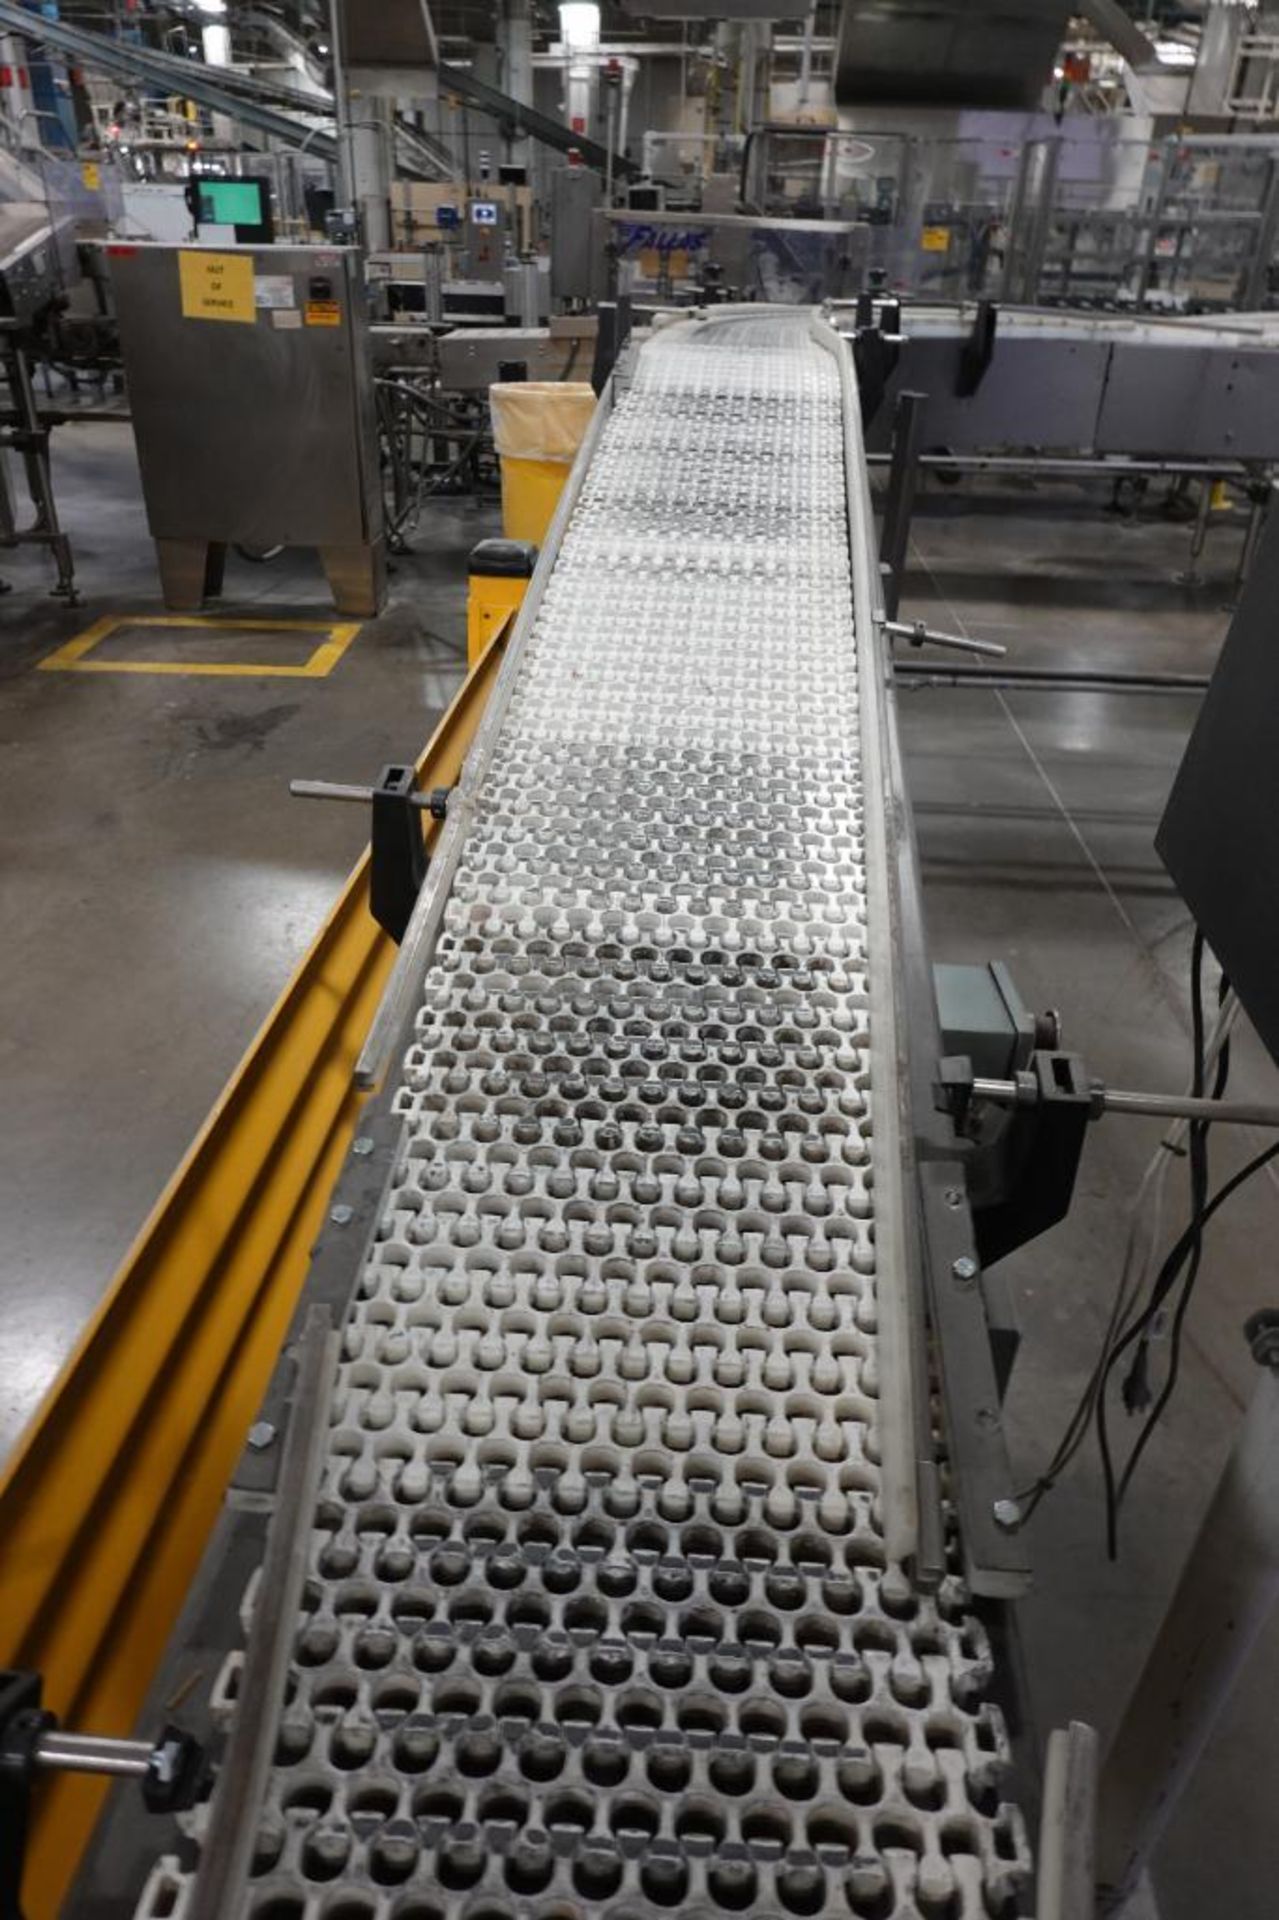 Safeline metal detector with conveyor - Image 10 of 14